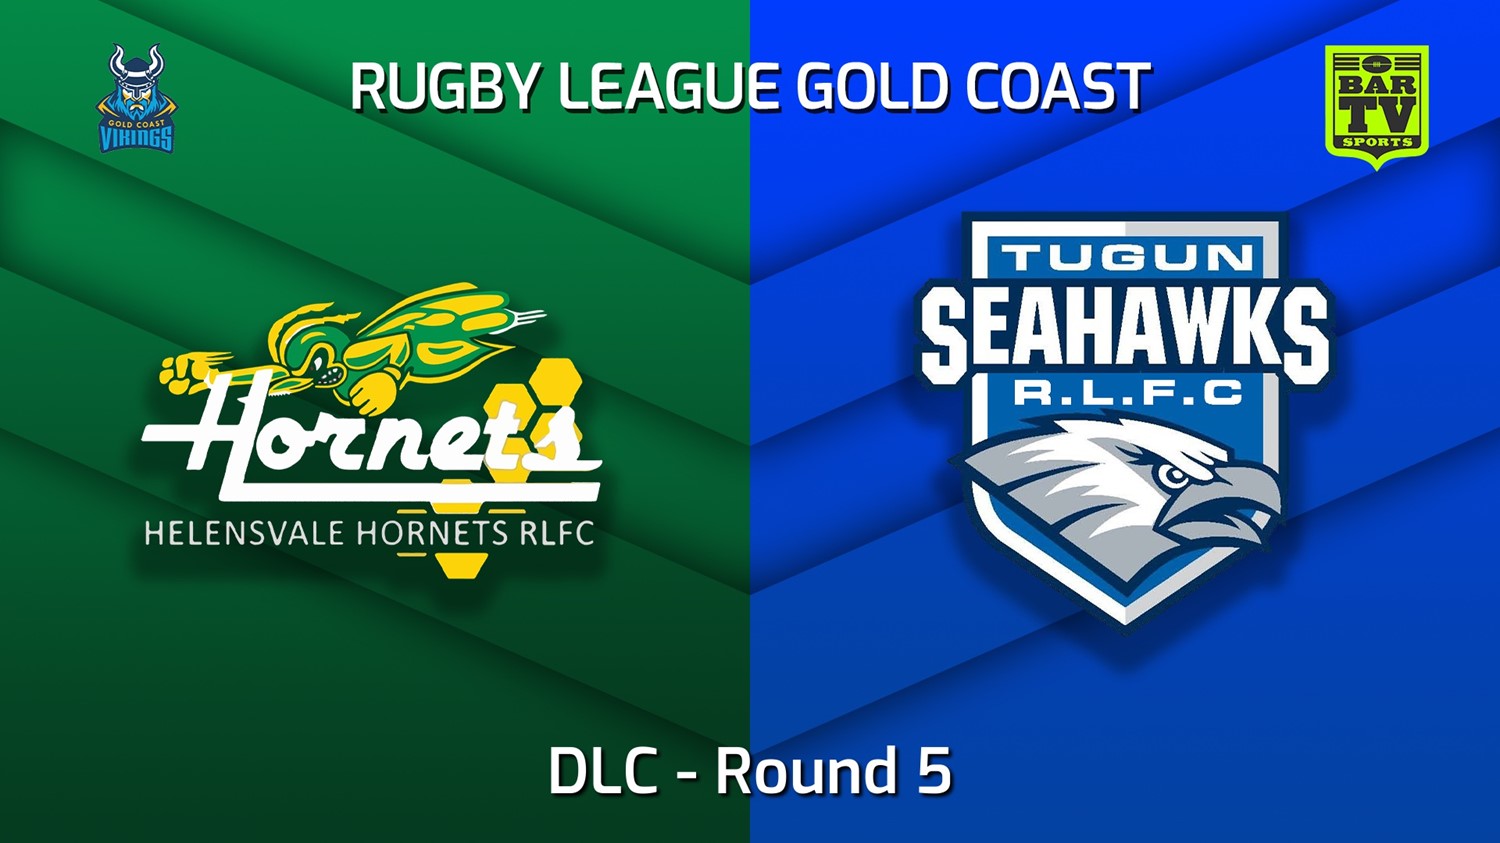 220508-Gold Coast Round 5 - DLC - Helensvale Hornets v Tugun Seahawks Slate Image